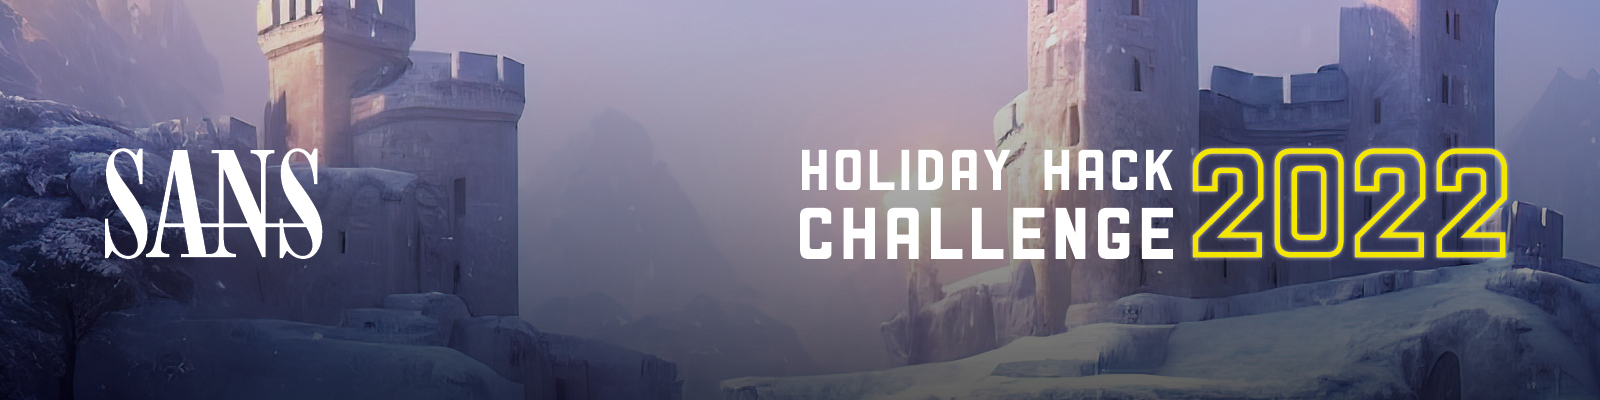 SANS Holiday Hack Challenge 2022